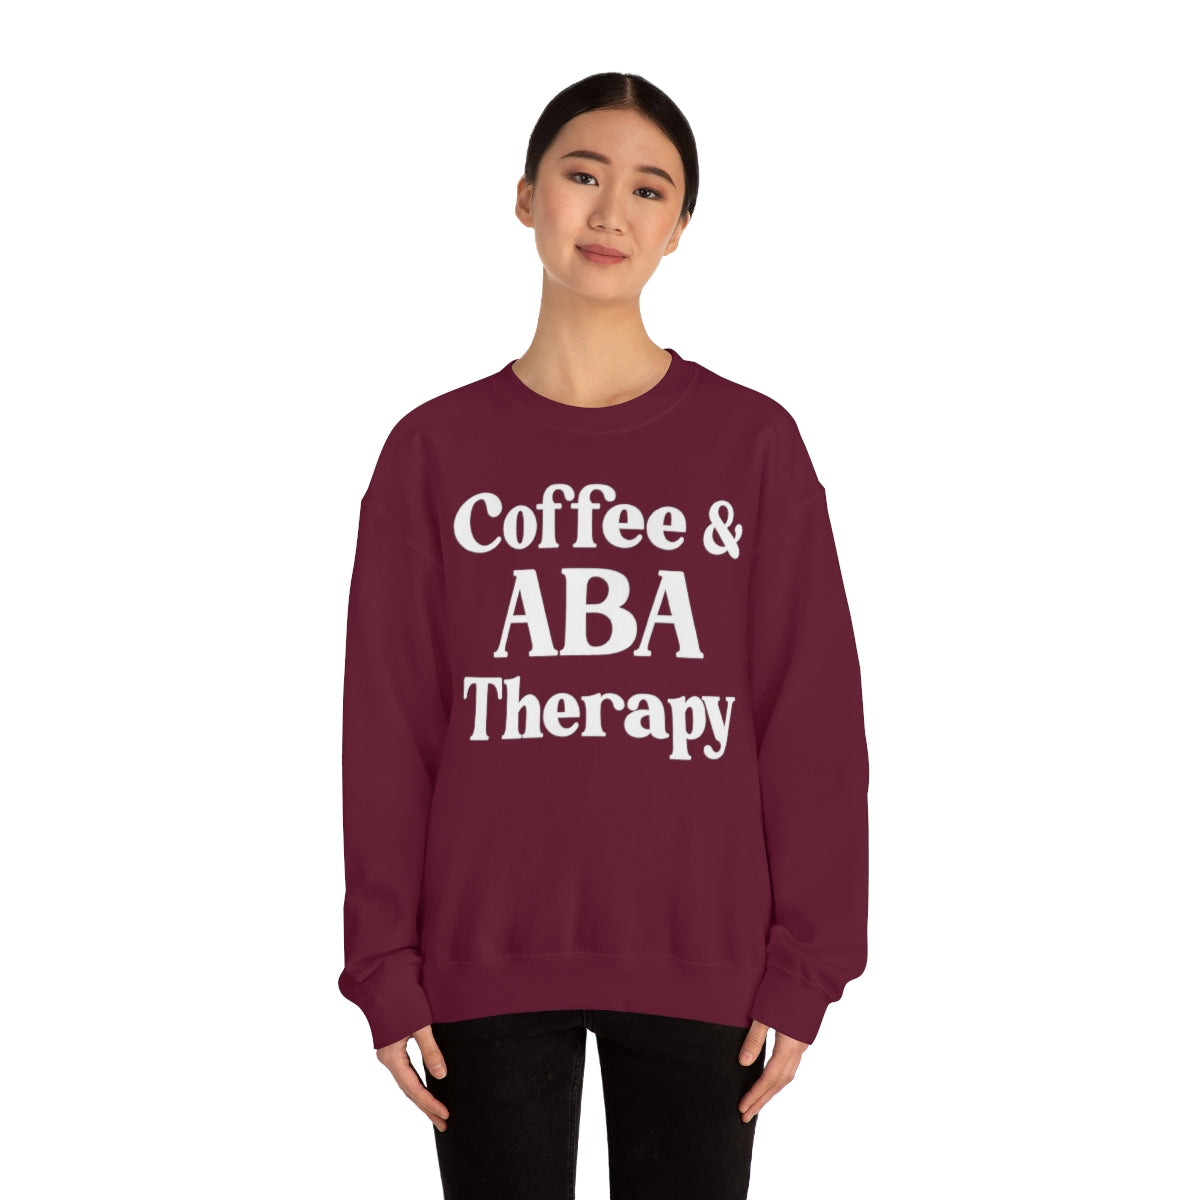 Coffee & ABA Therapy Sweatshirt | Applied Behavior Analysis | Behavior Analyst | Autism | ABA | RBT | Bcba